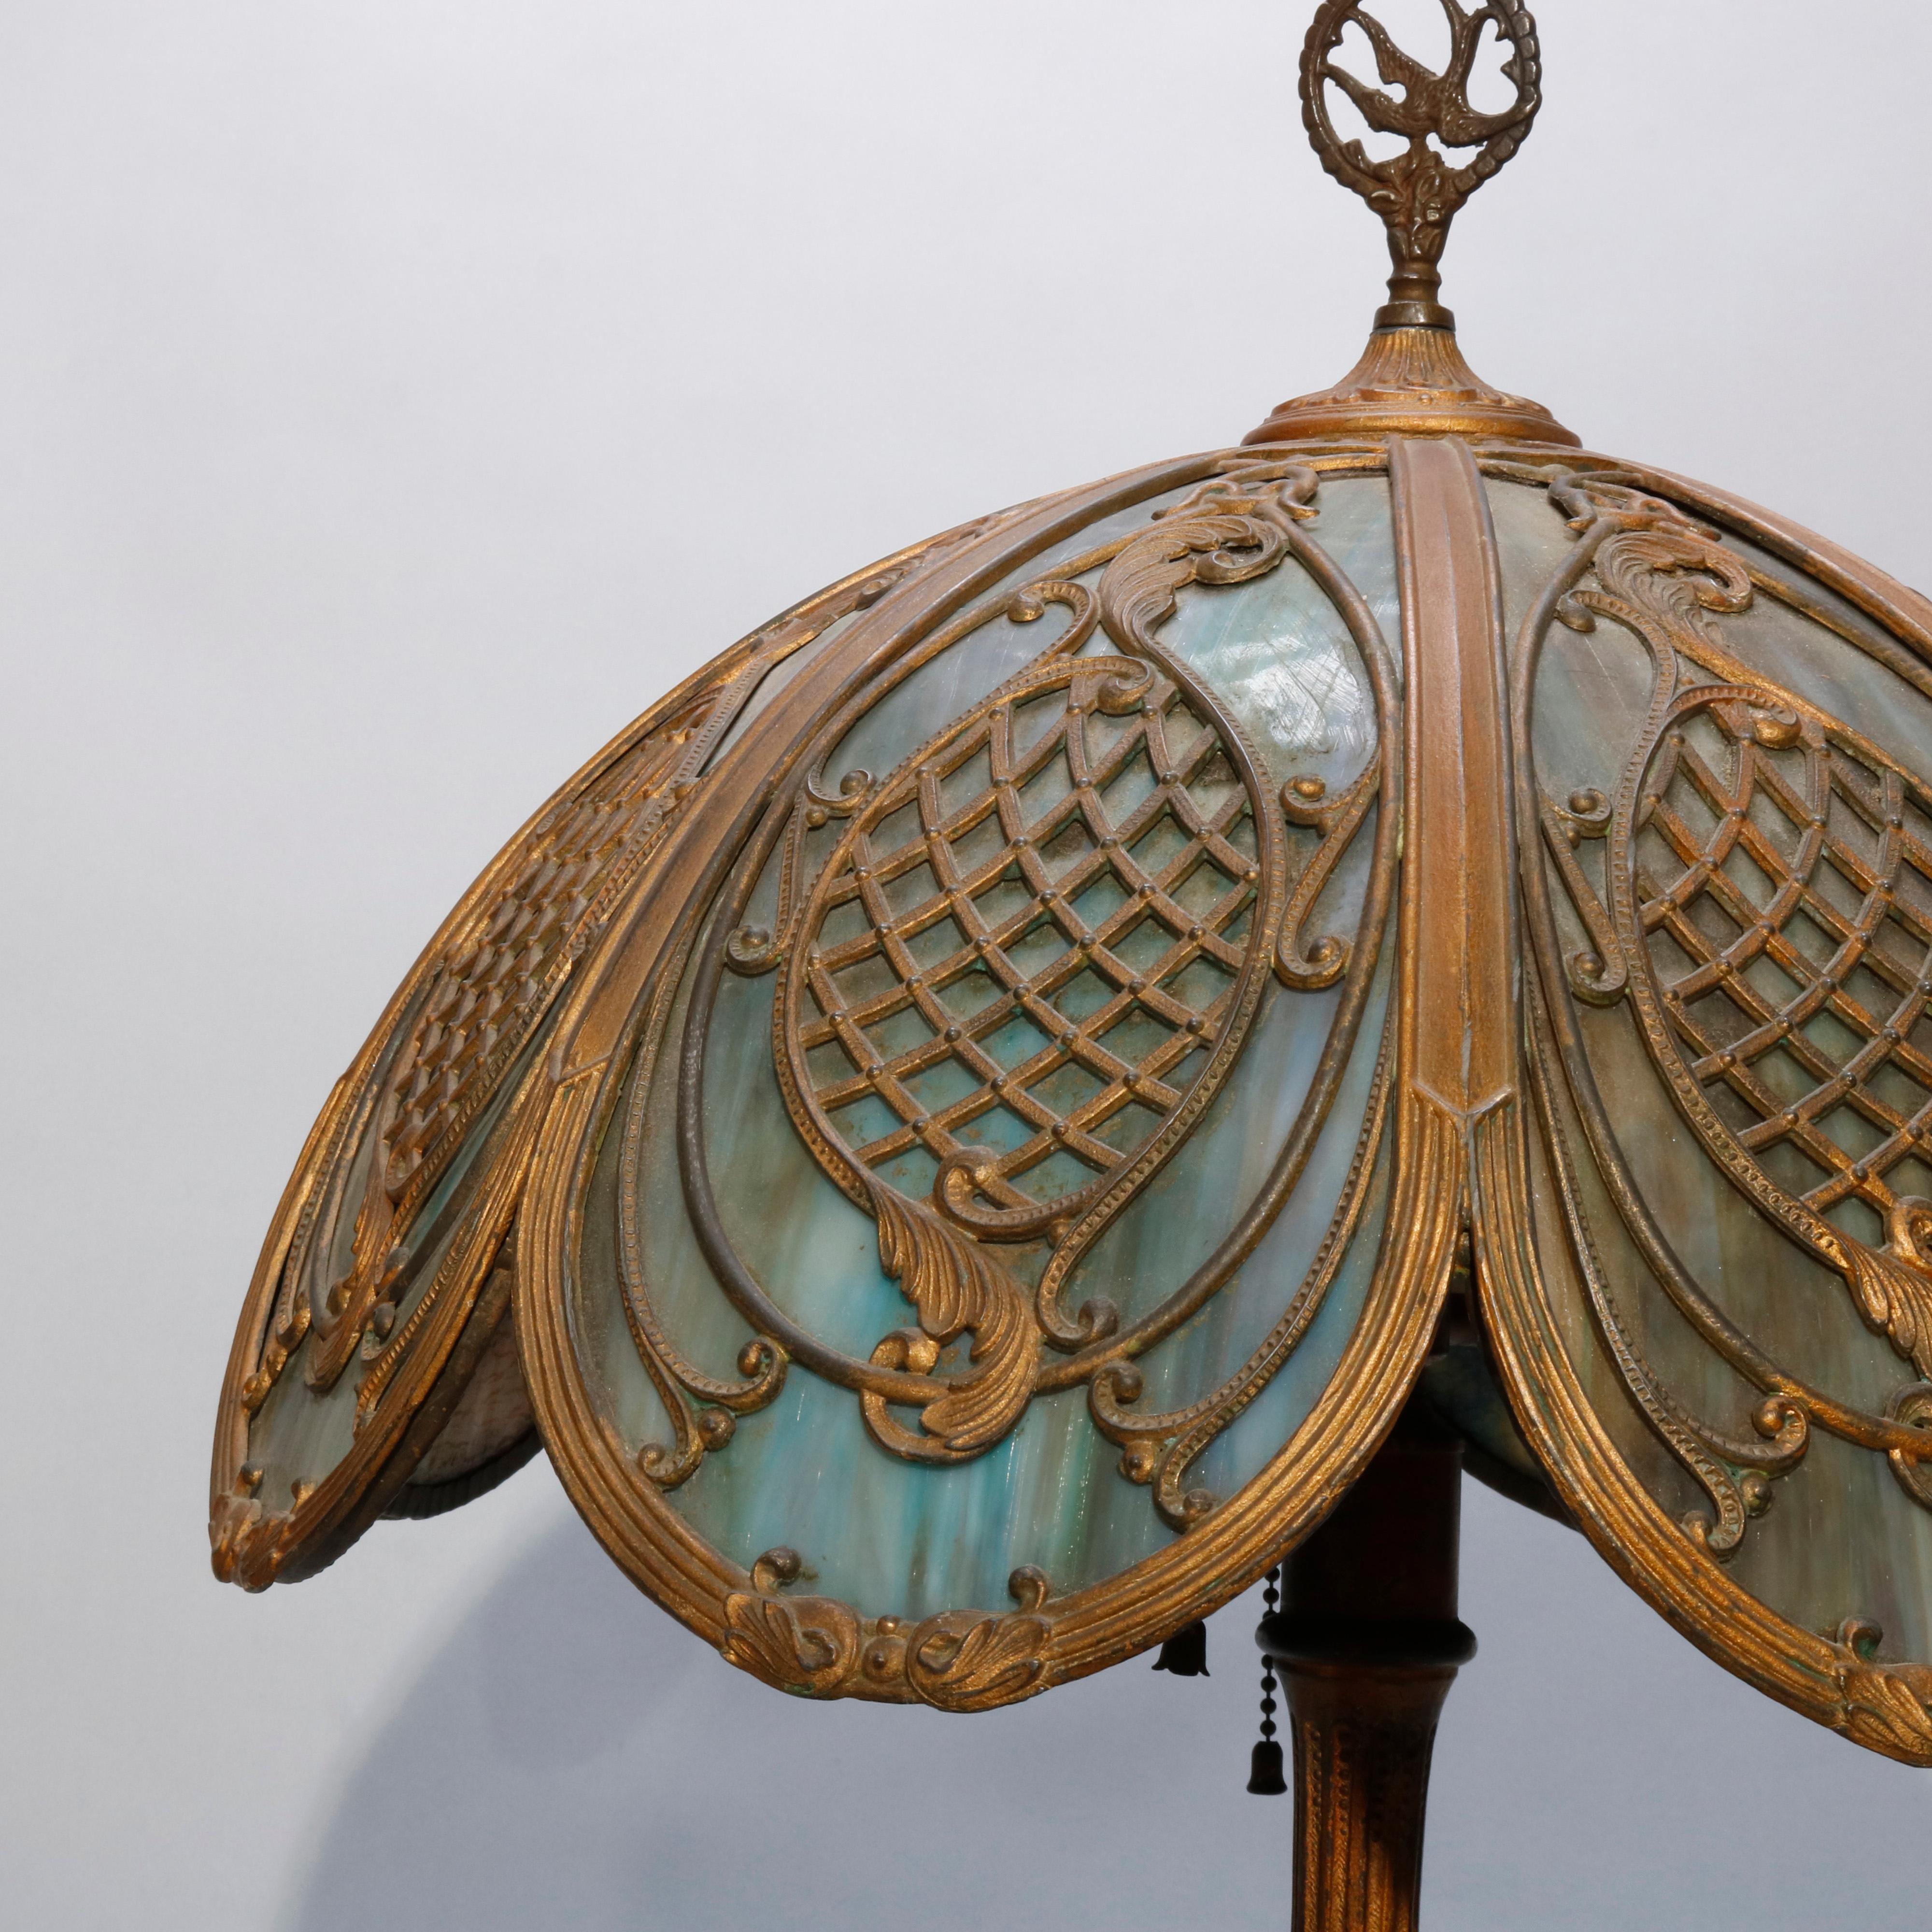 20th Century Arts & Crafts Bradley & Hubbard Slag Glass Oval Panel Table Lamp, circa 1920